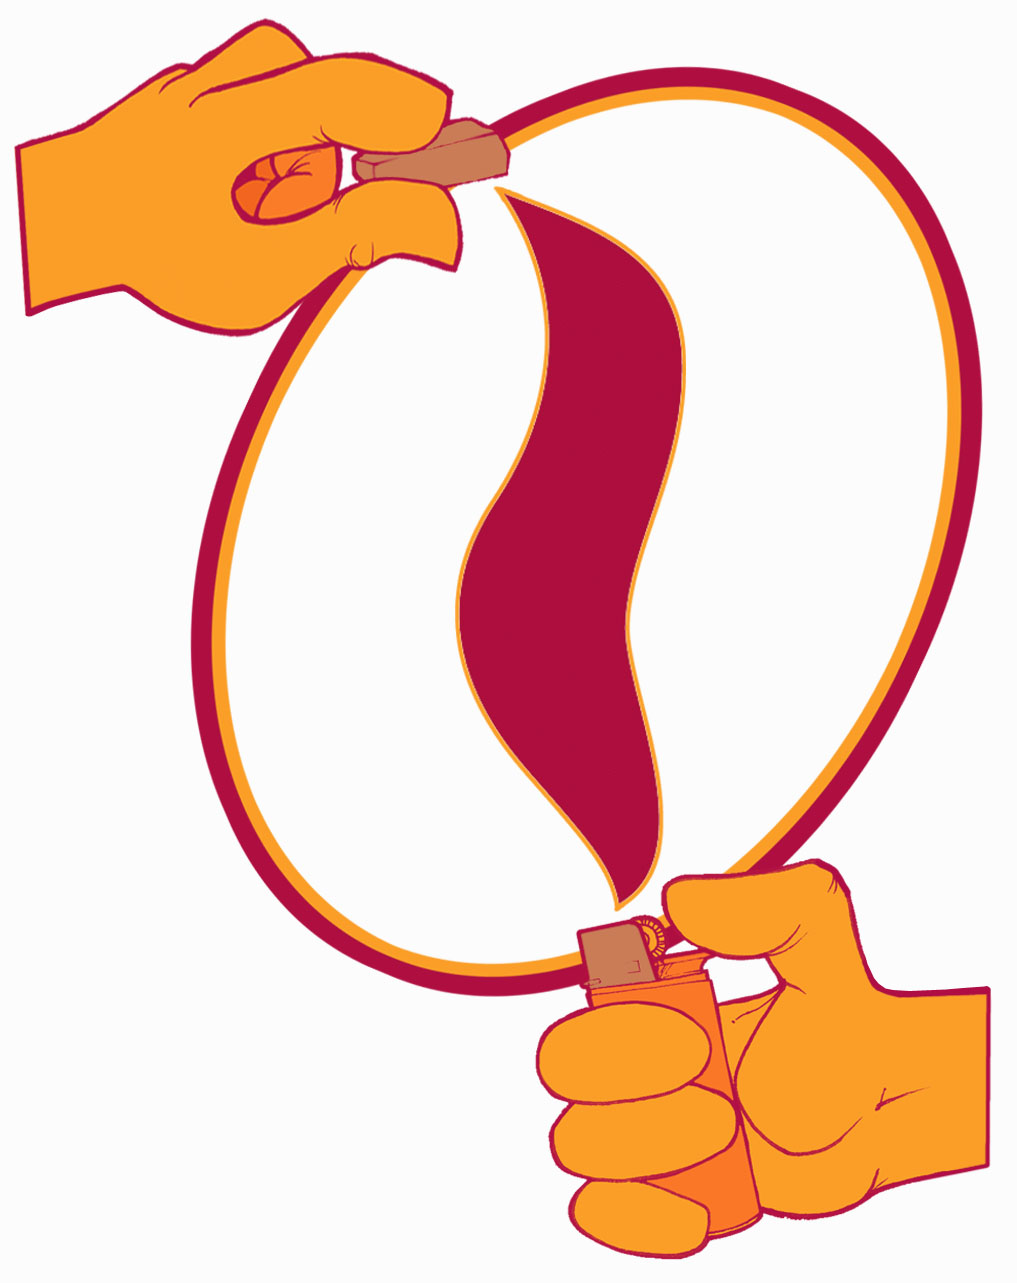 Logo Parqueolimpiadas 2004